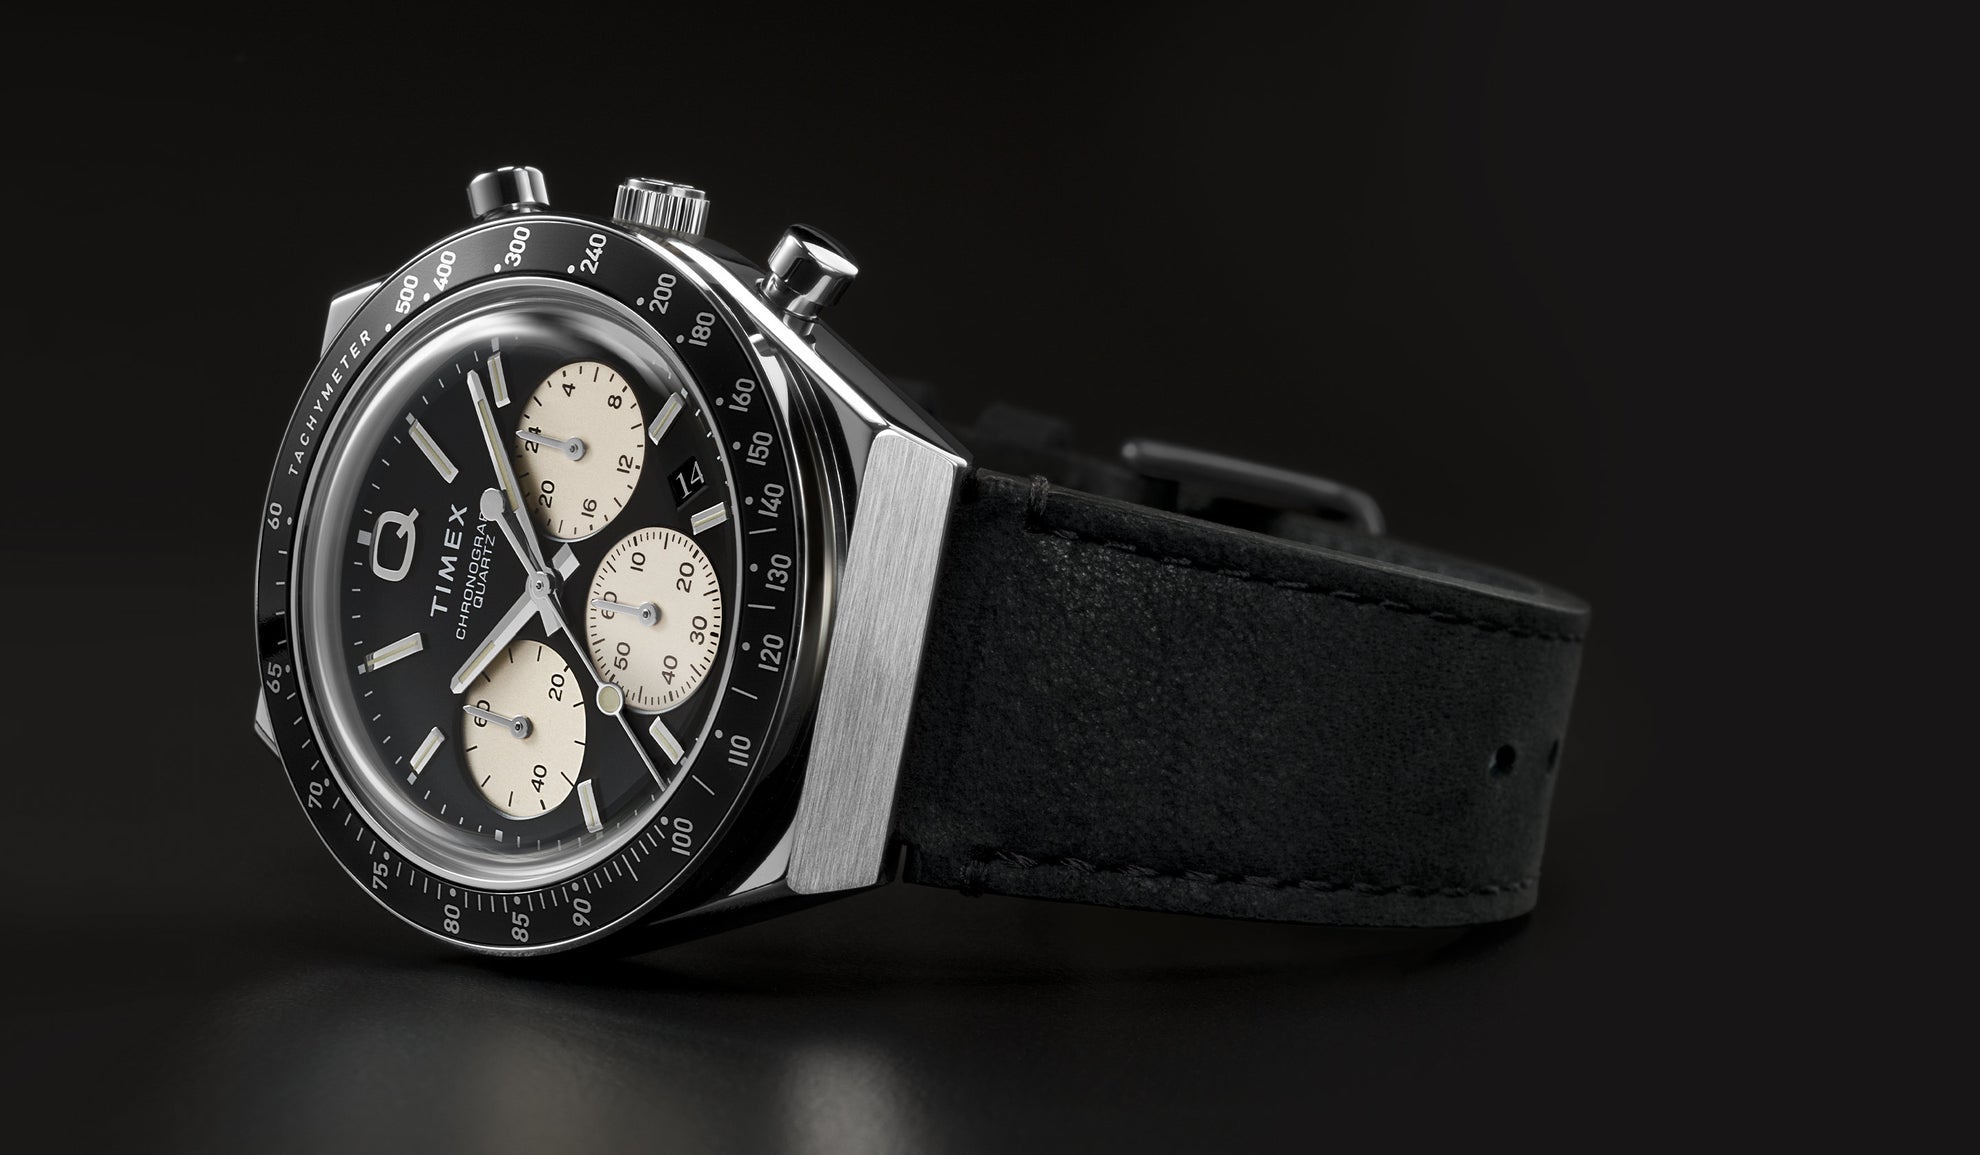 Timex Men's Q Chronograph Stainless Steel Bracelet Watch